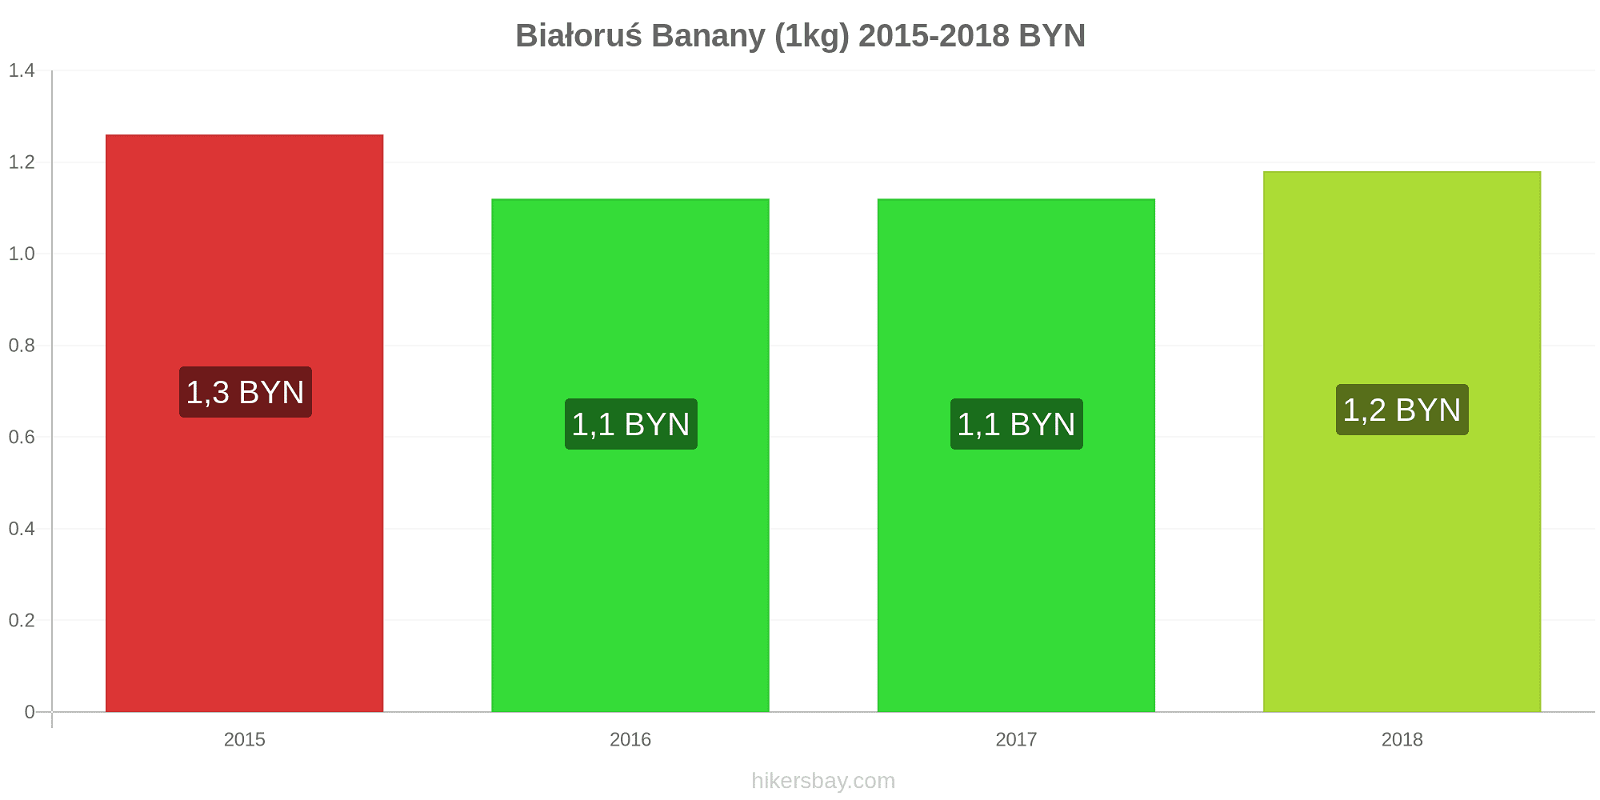 Białoruś zmiany cen Banany (1kg) hikersbay.com